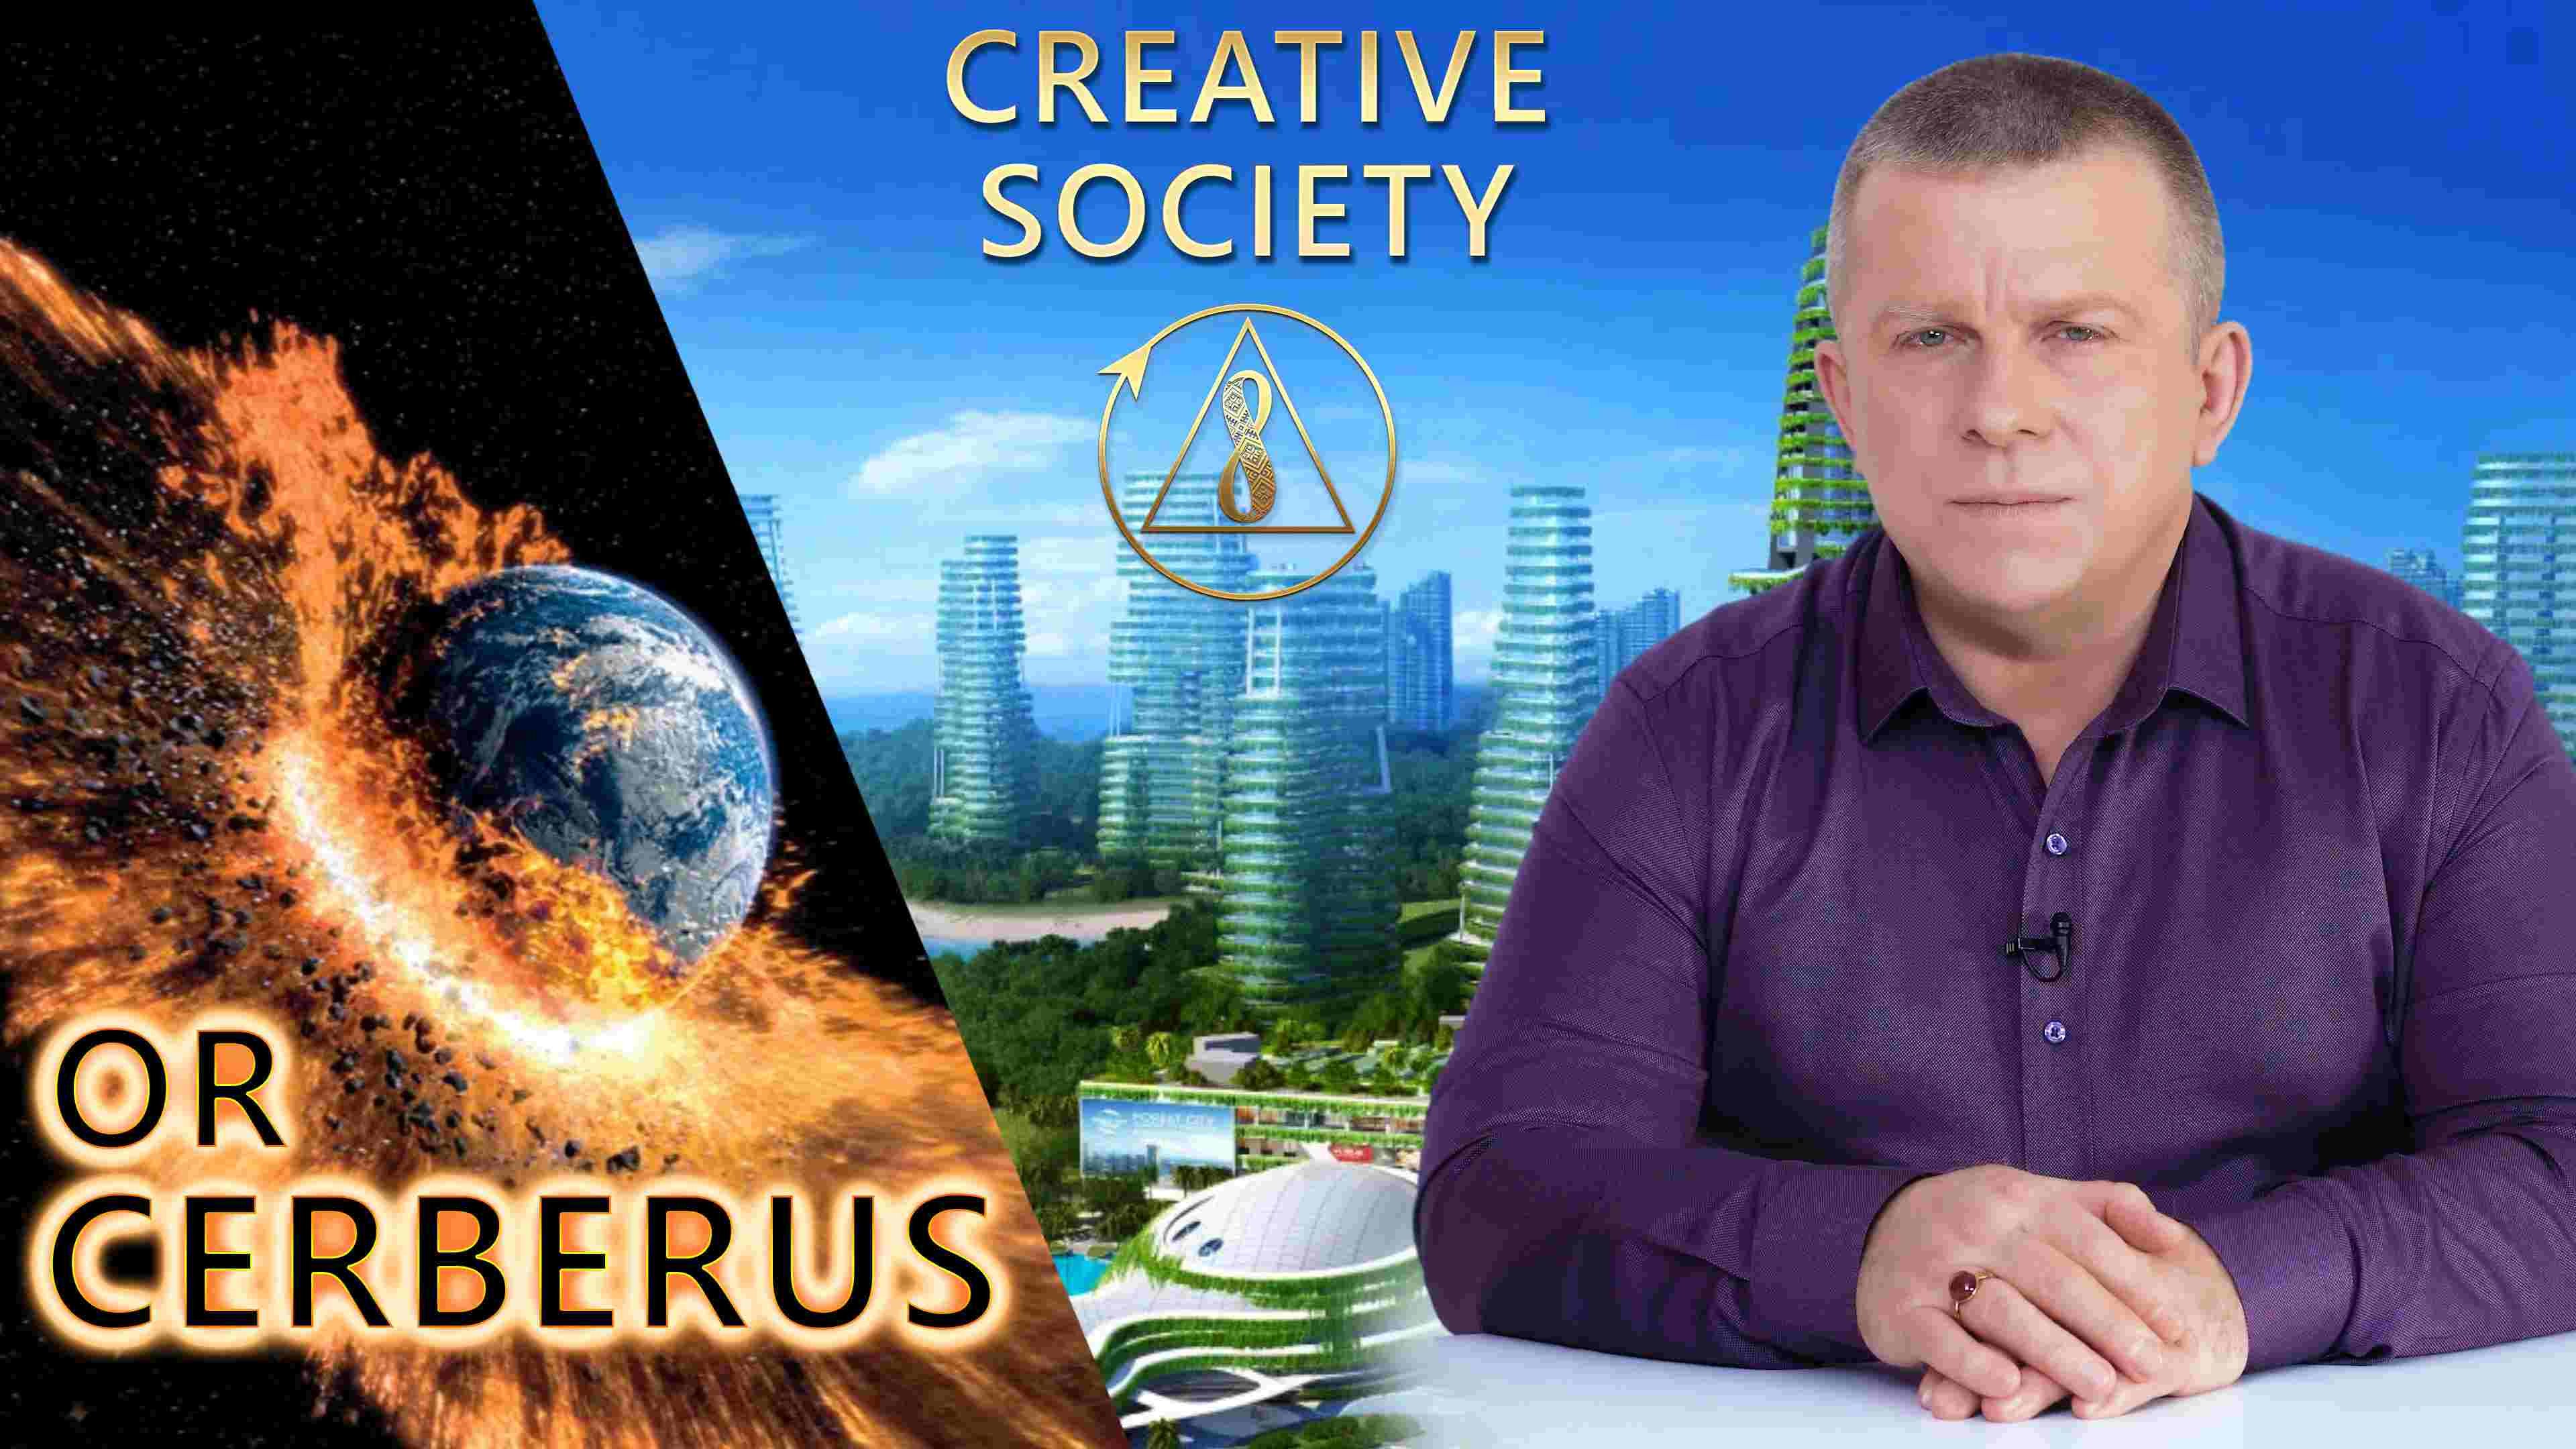 Creative Society or the Cerberus